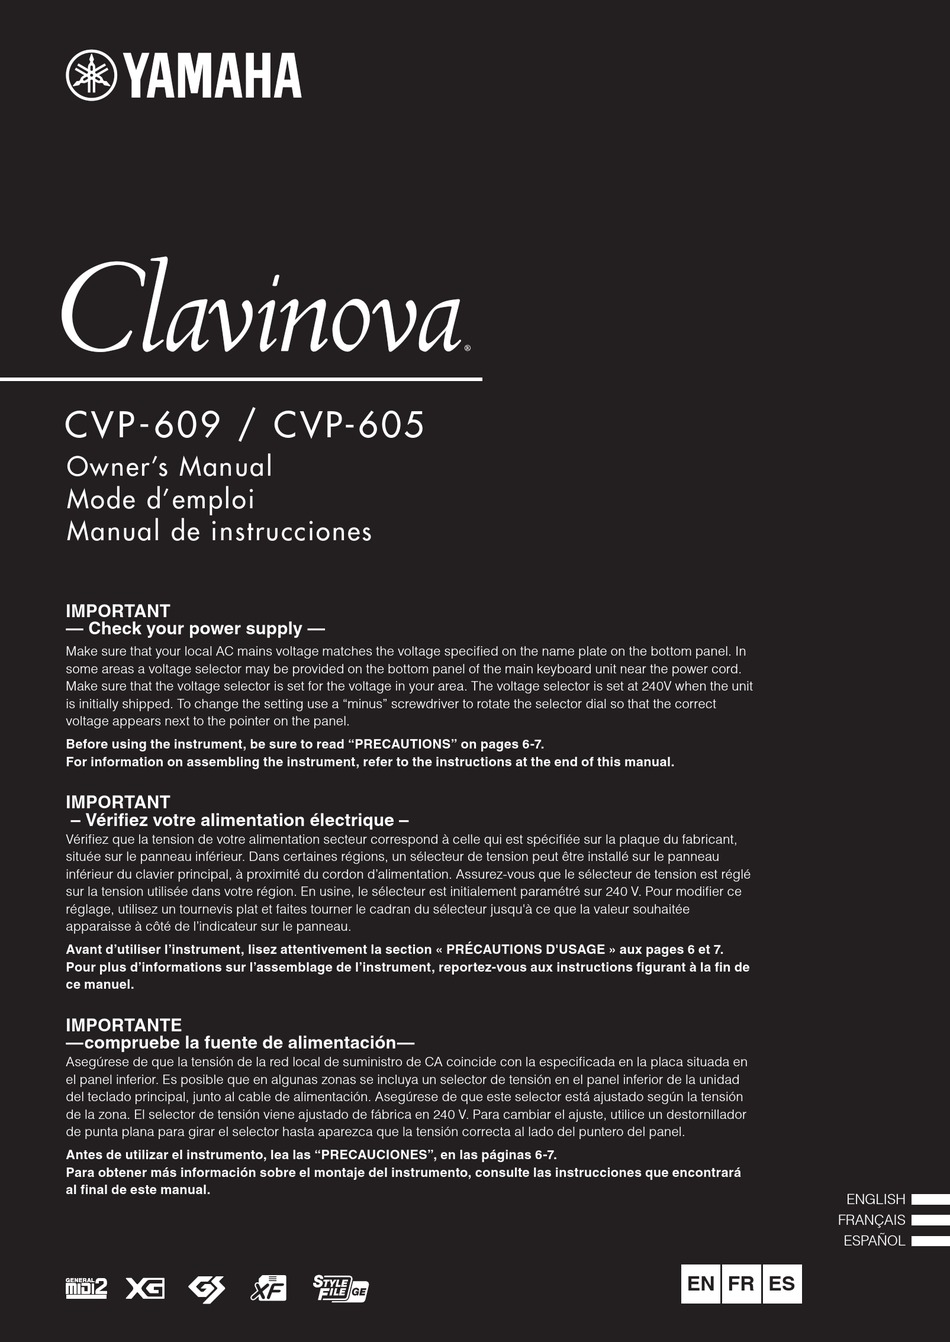 YAMAHA CLAVINOVA CVP-609 OWNER'S MANUAL Pdf Download | ManualsLib